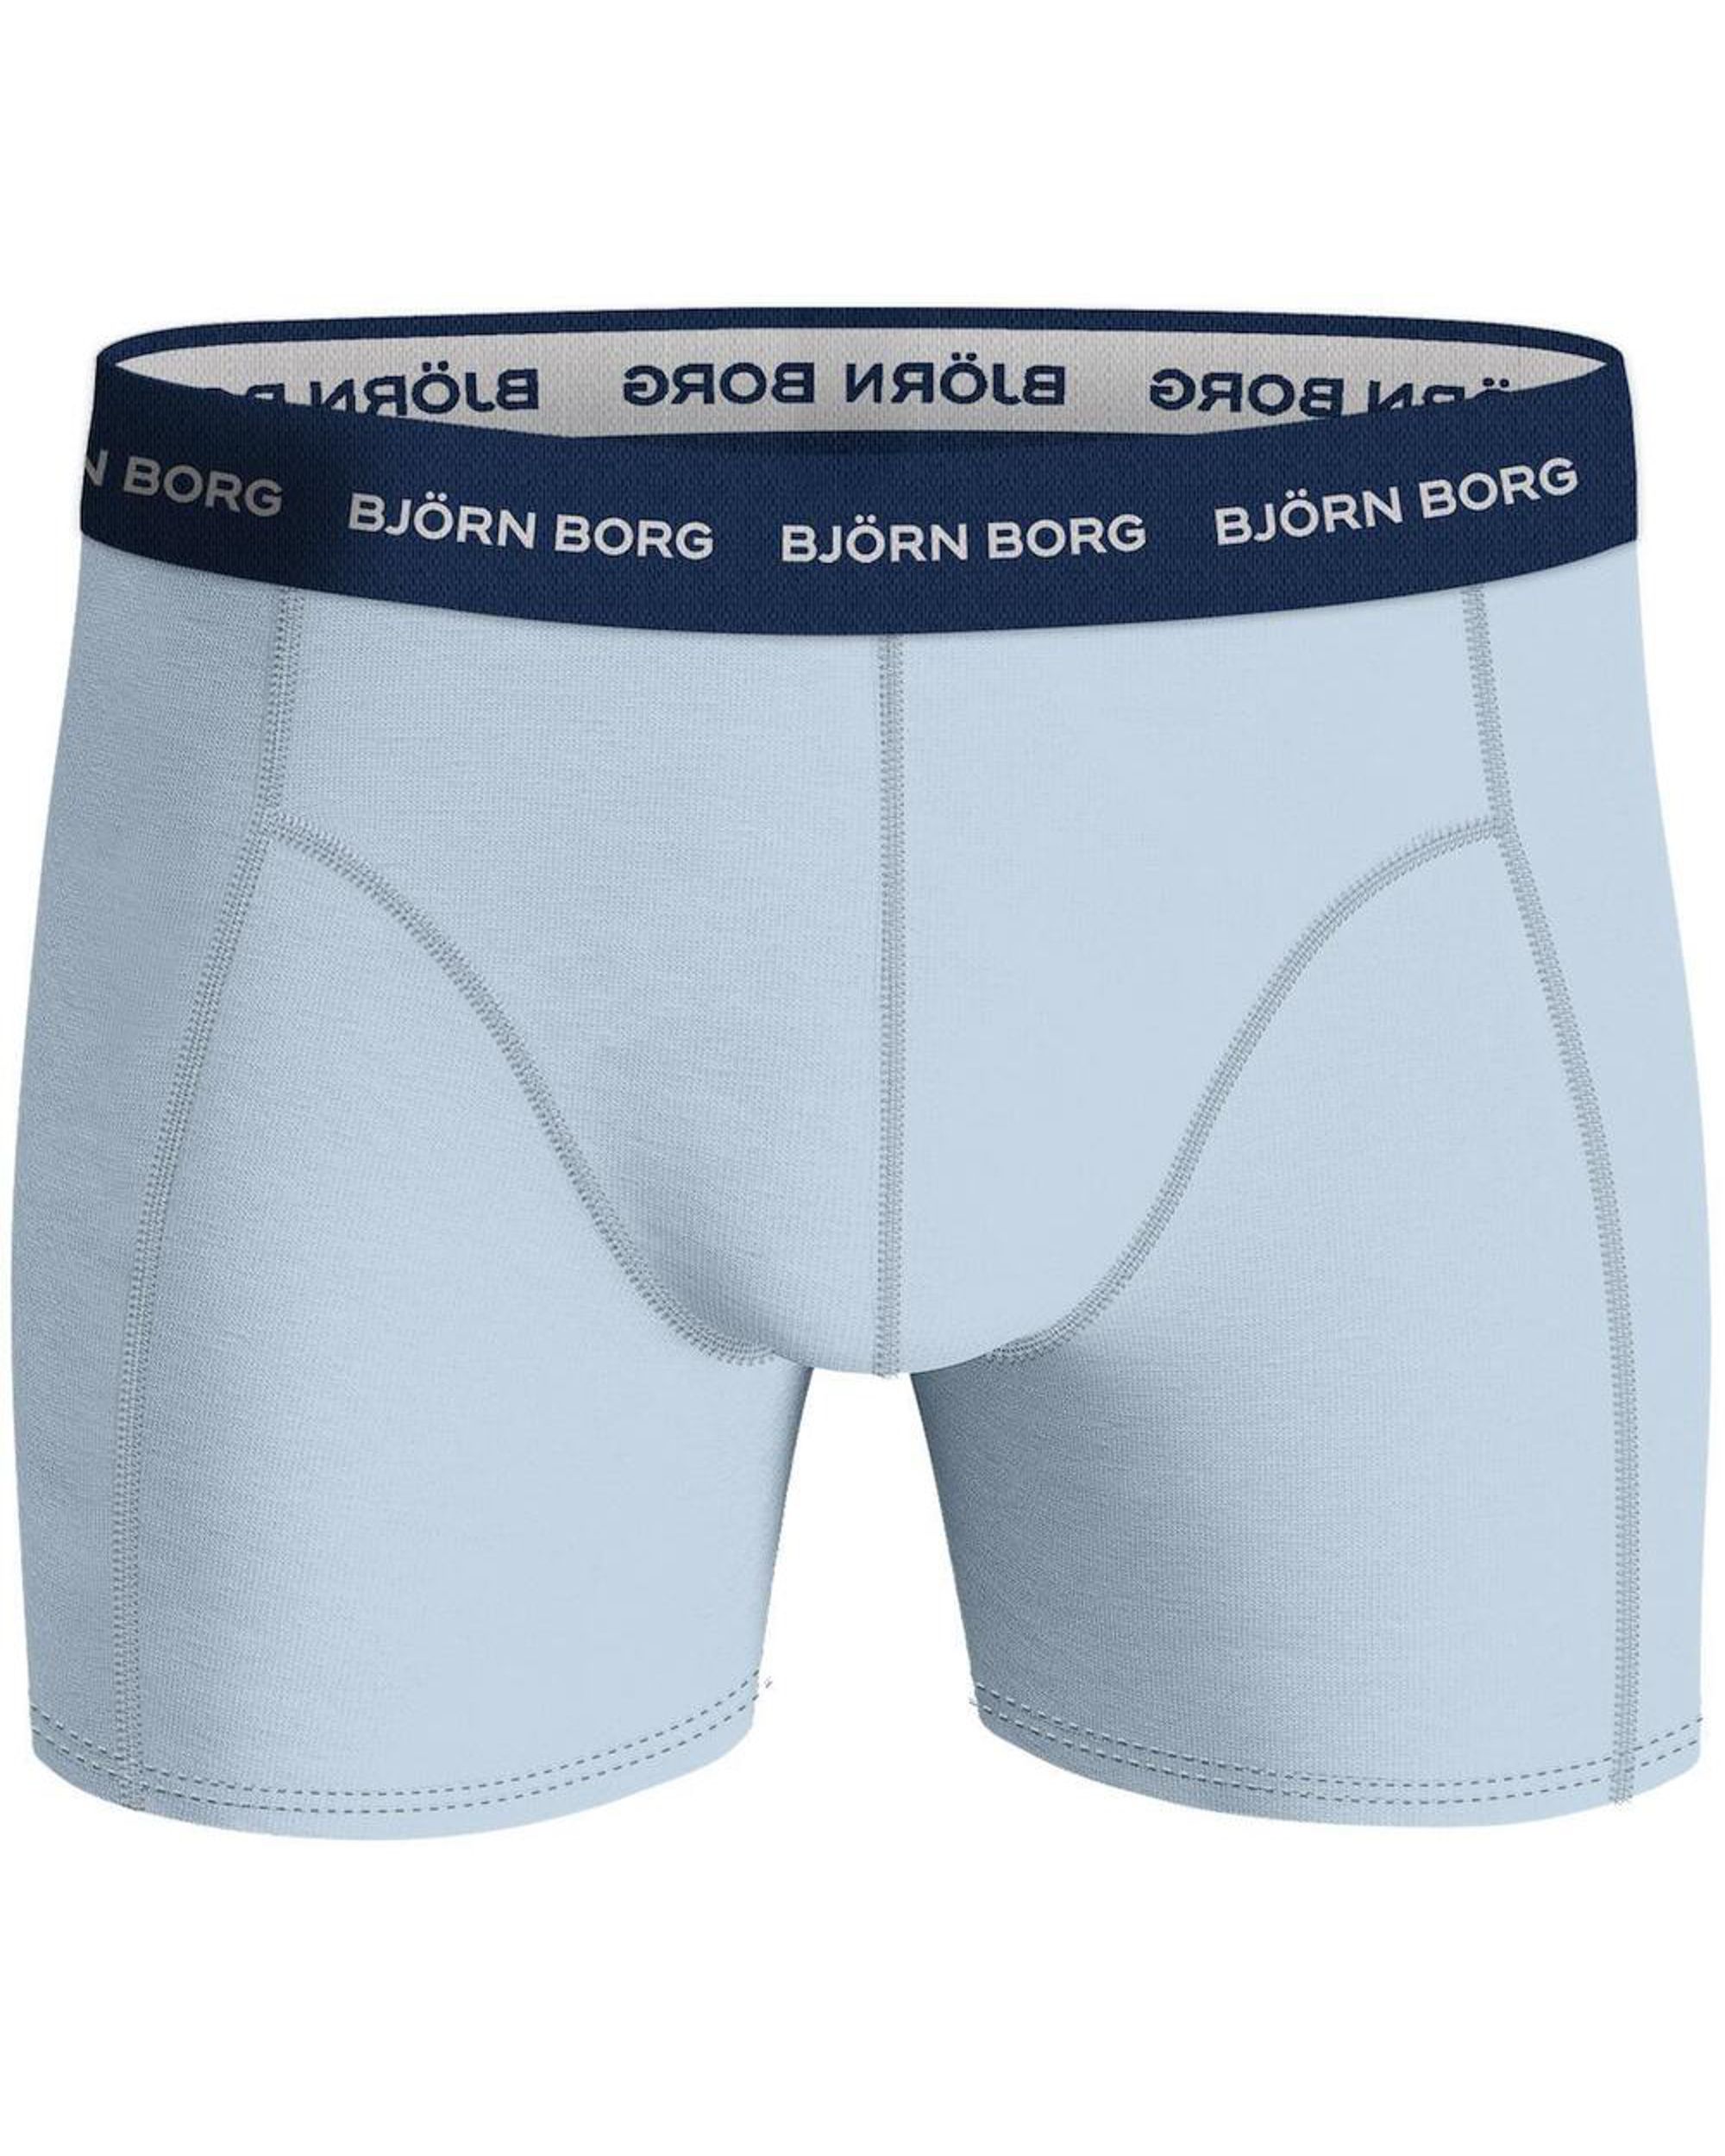 Björn Borg Boxershort Multicolor 094787-001-L